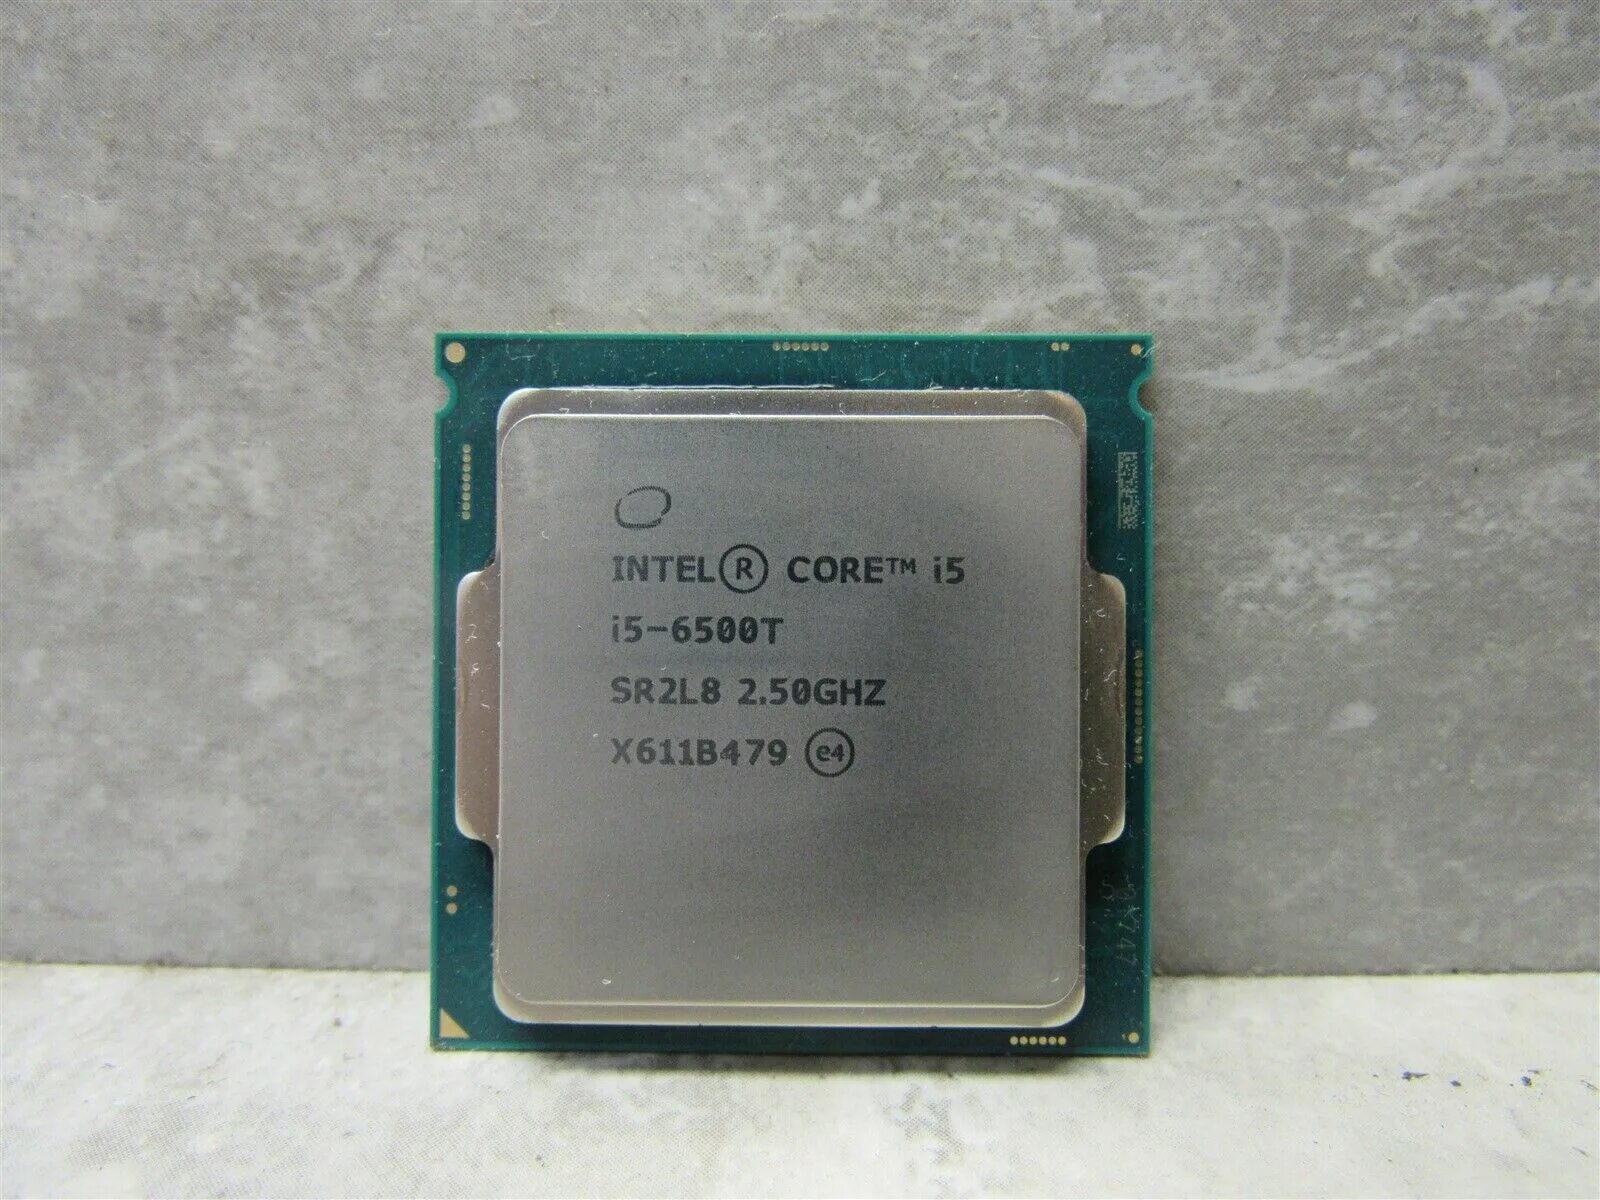 Intel Core i5-6500t. Процессор Intel Core i5-6500t Skylake. Intel(r) Core(TM) i5-6500t. I5 6500 сокет